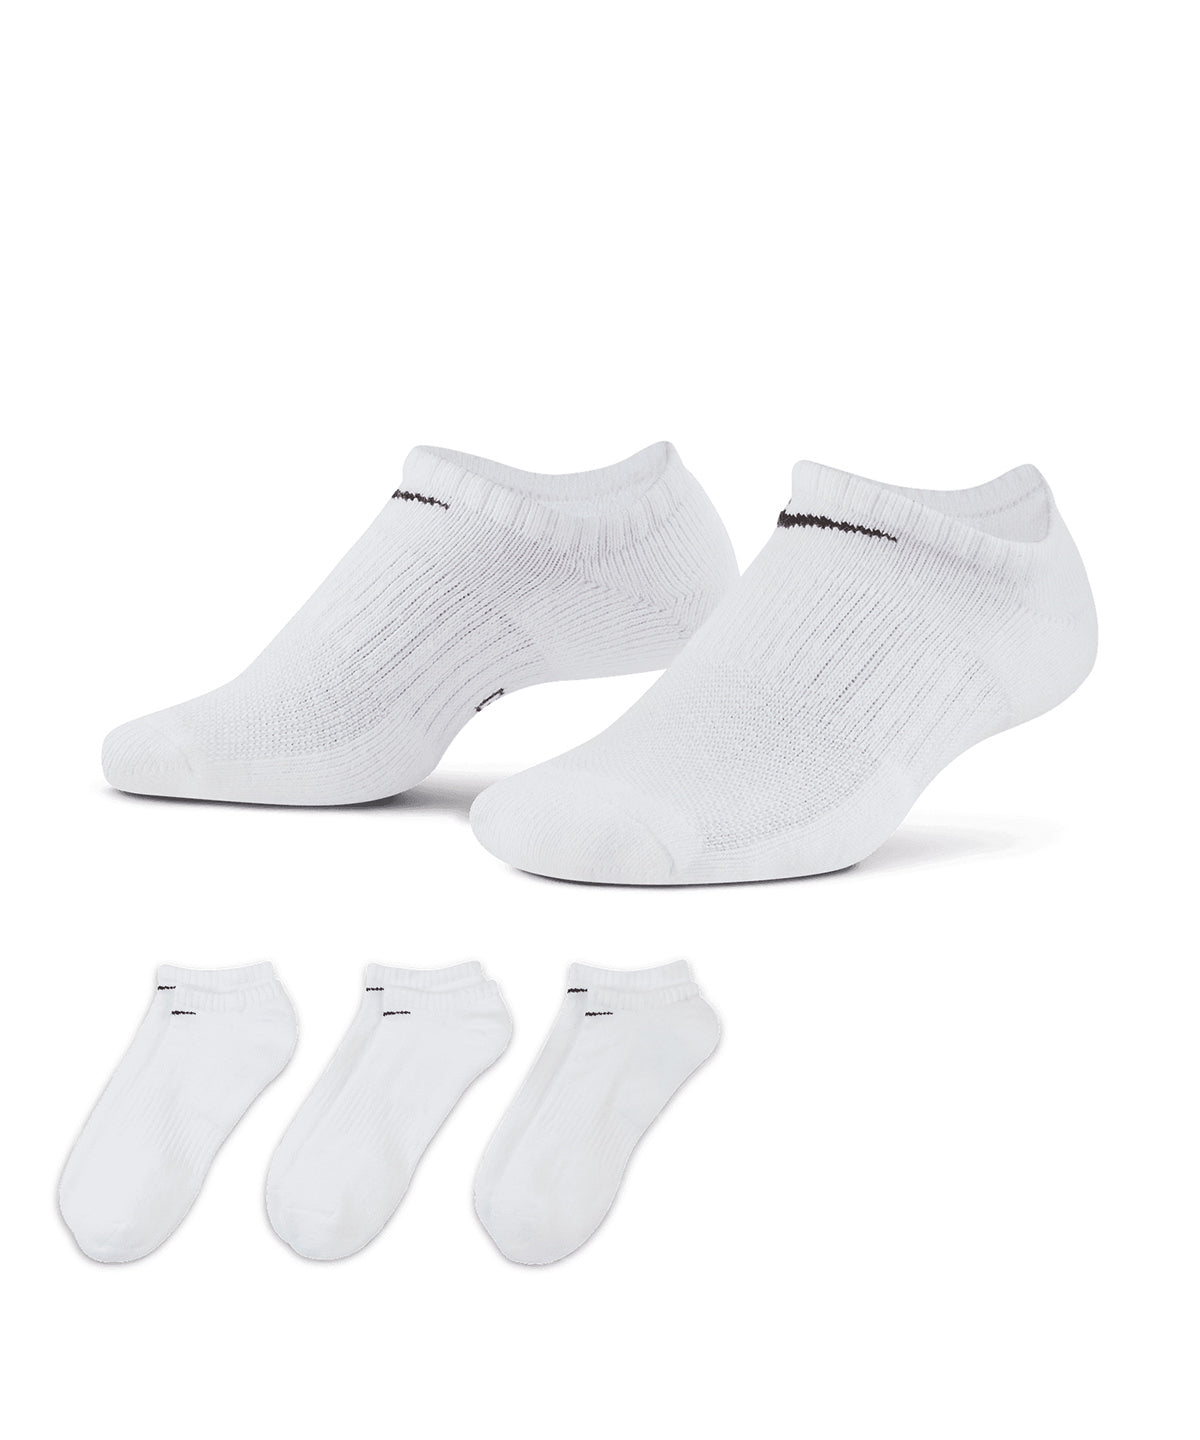 Sokkar - Nike Everyday Cushioned No Show Socks (3 Pairs)